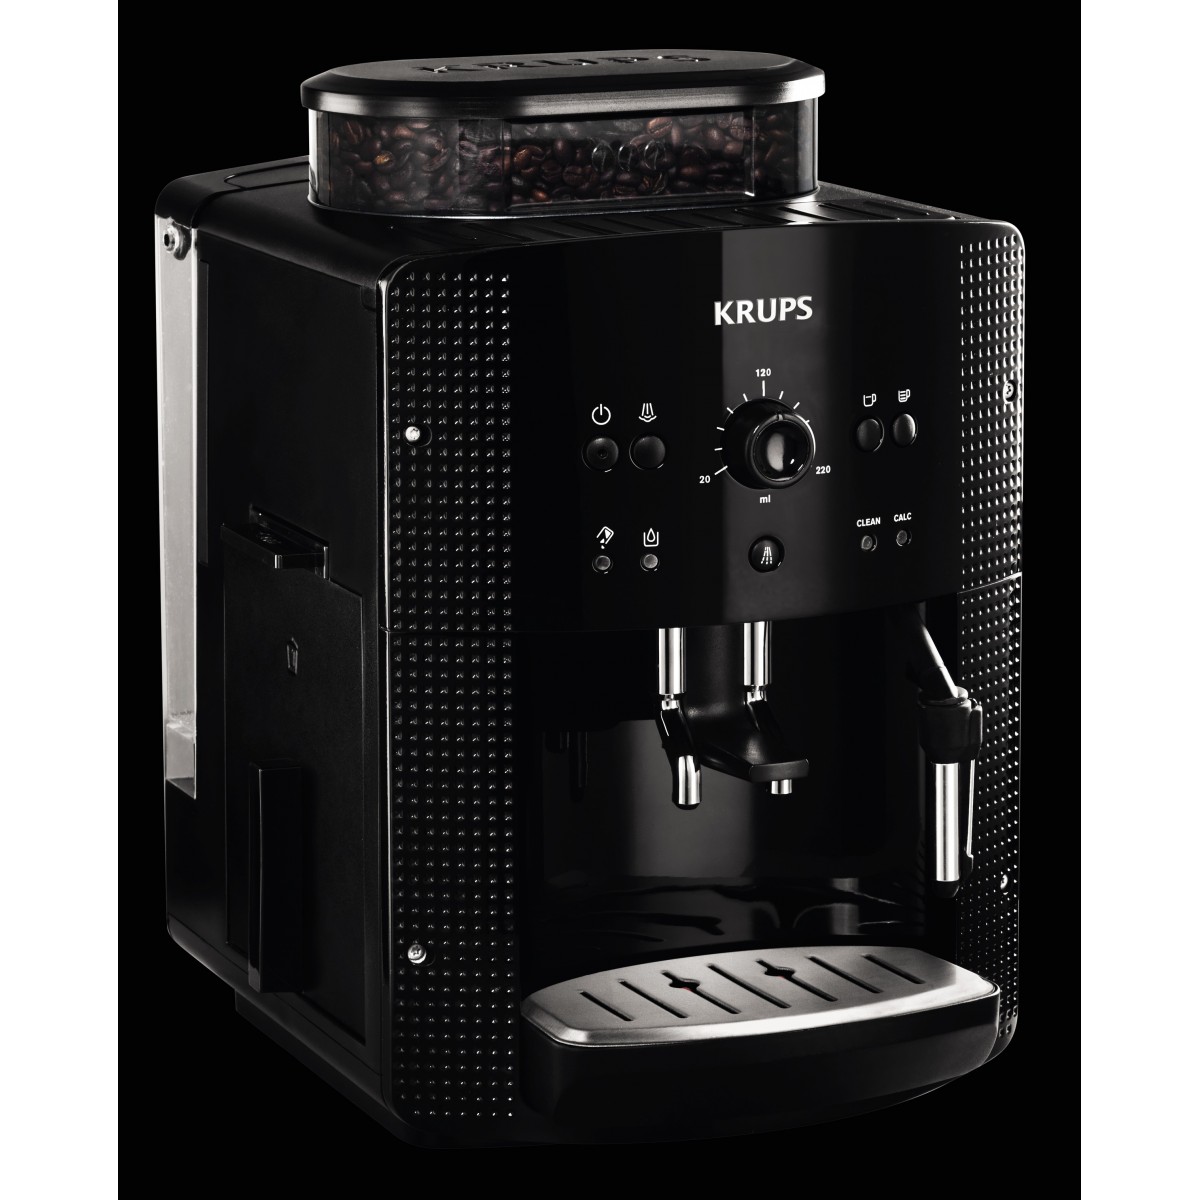 Krups EA8108 - Espresso machine - 1.8 L - Coffee beans,Ground coffee - Built-in grinder - 1450 W - Black